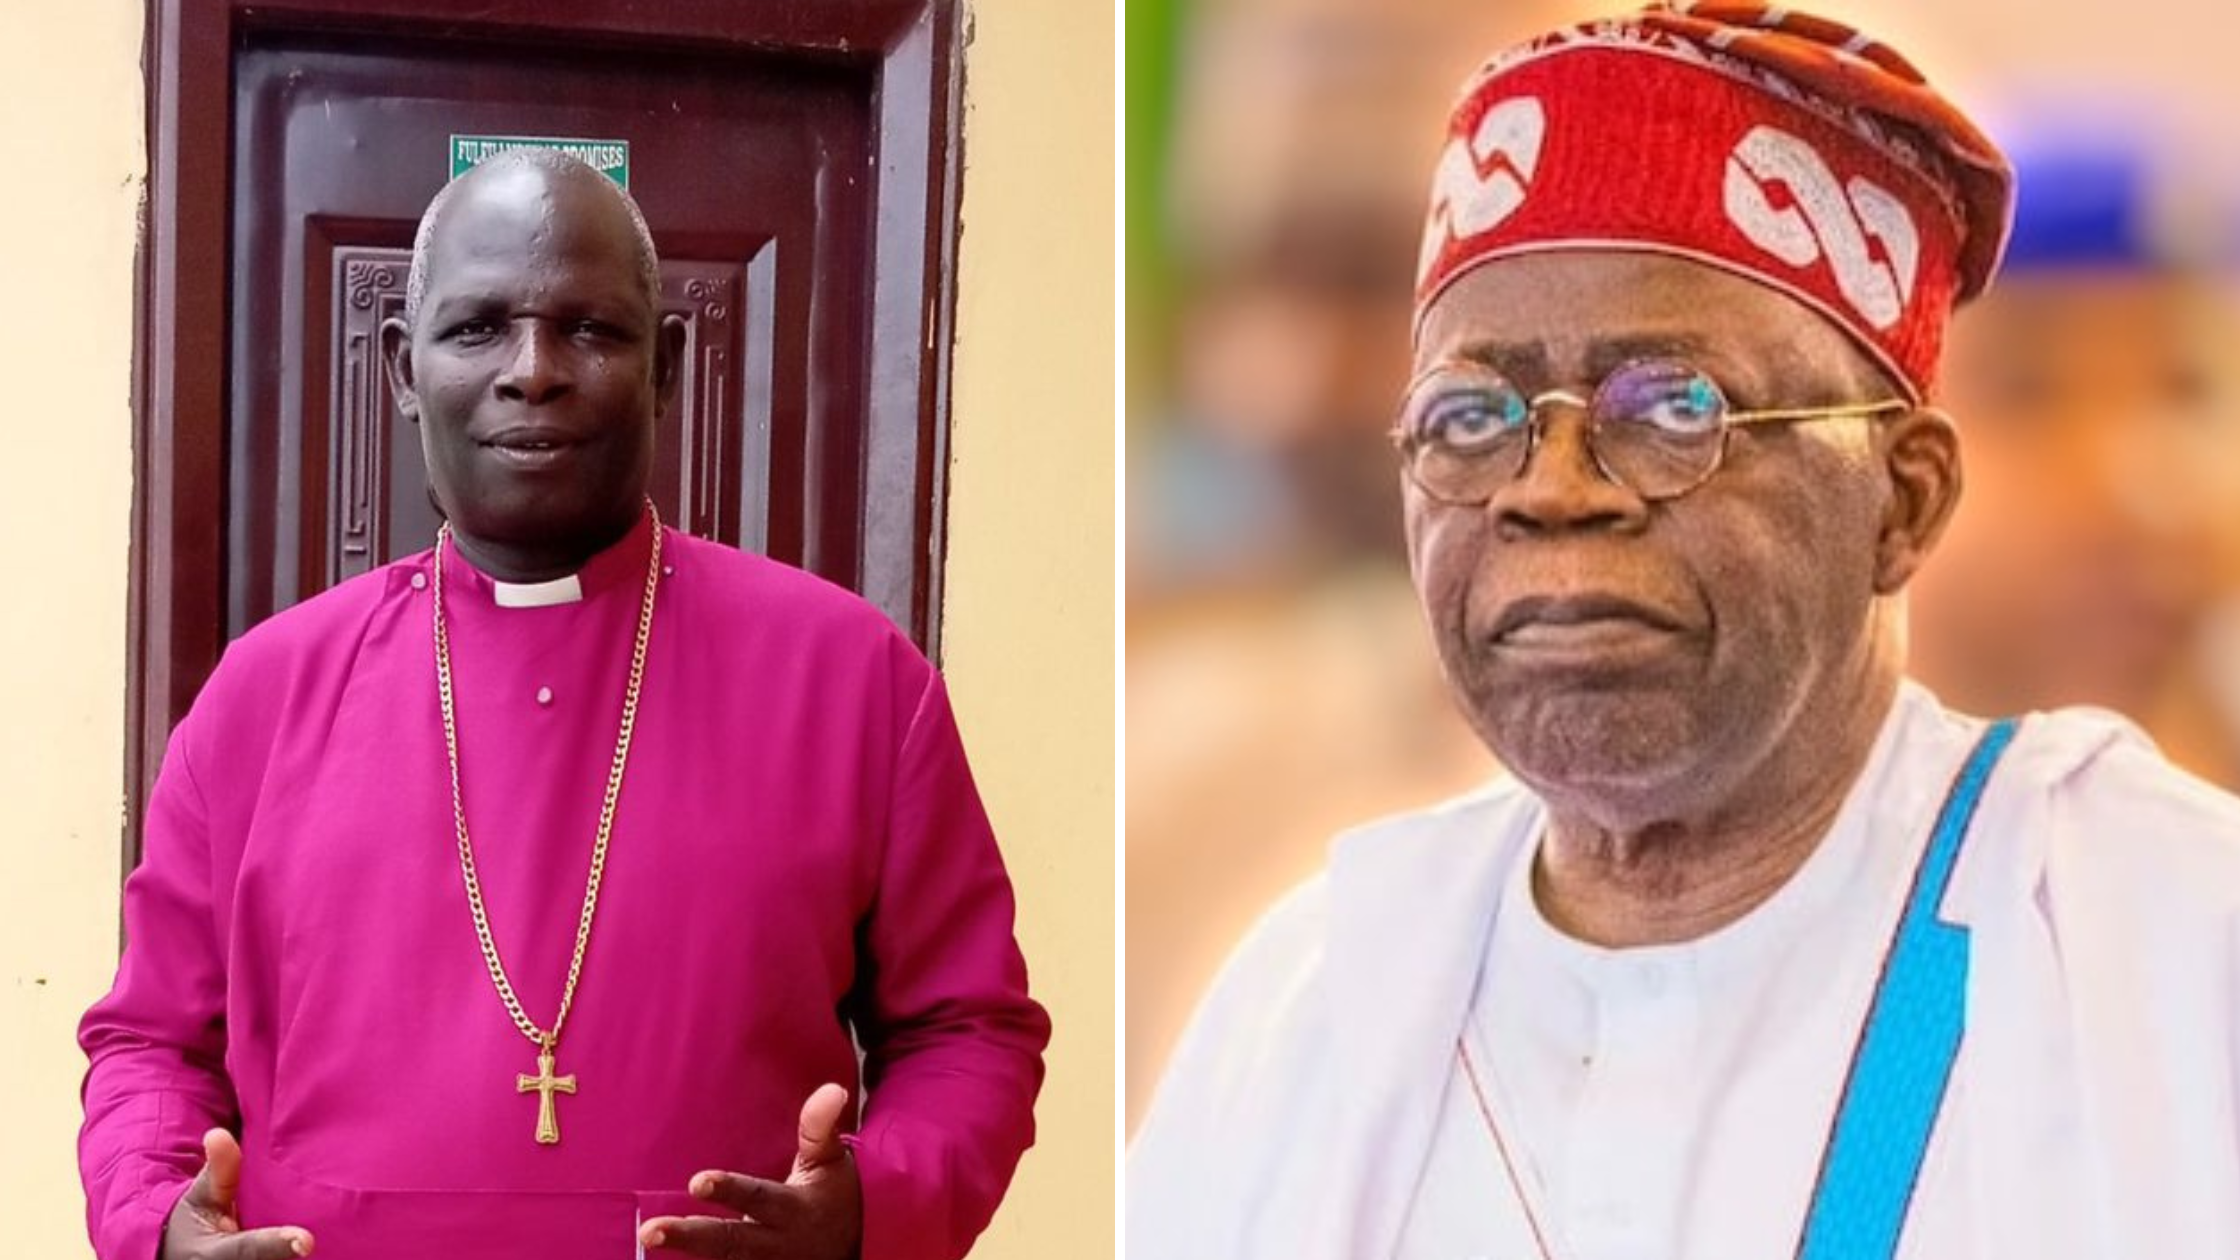 Our ‘City Boy’ Has Brought Extreme Hardship - Bishop Adeoye Knocks President Tinubu